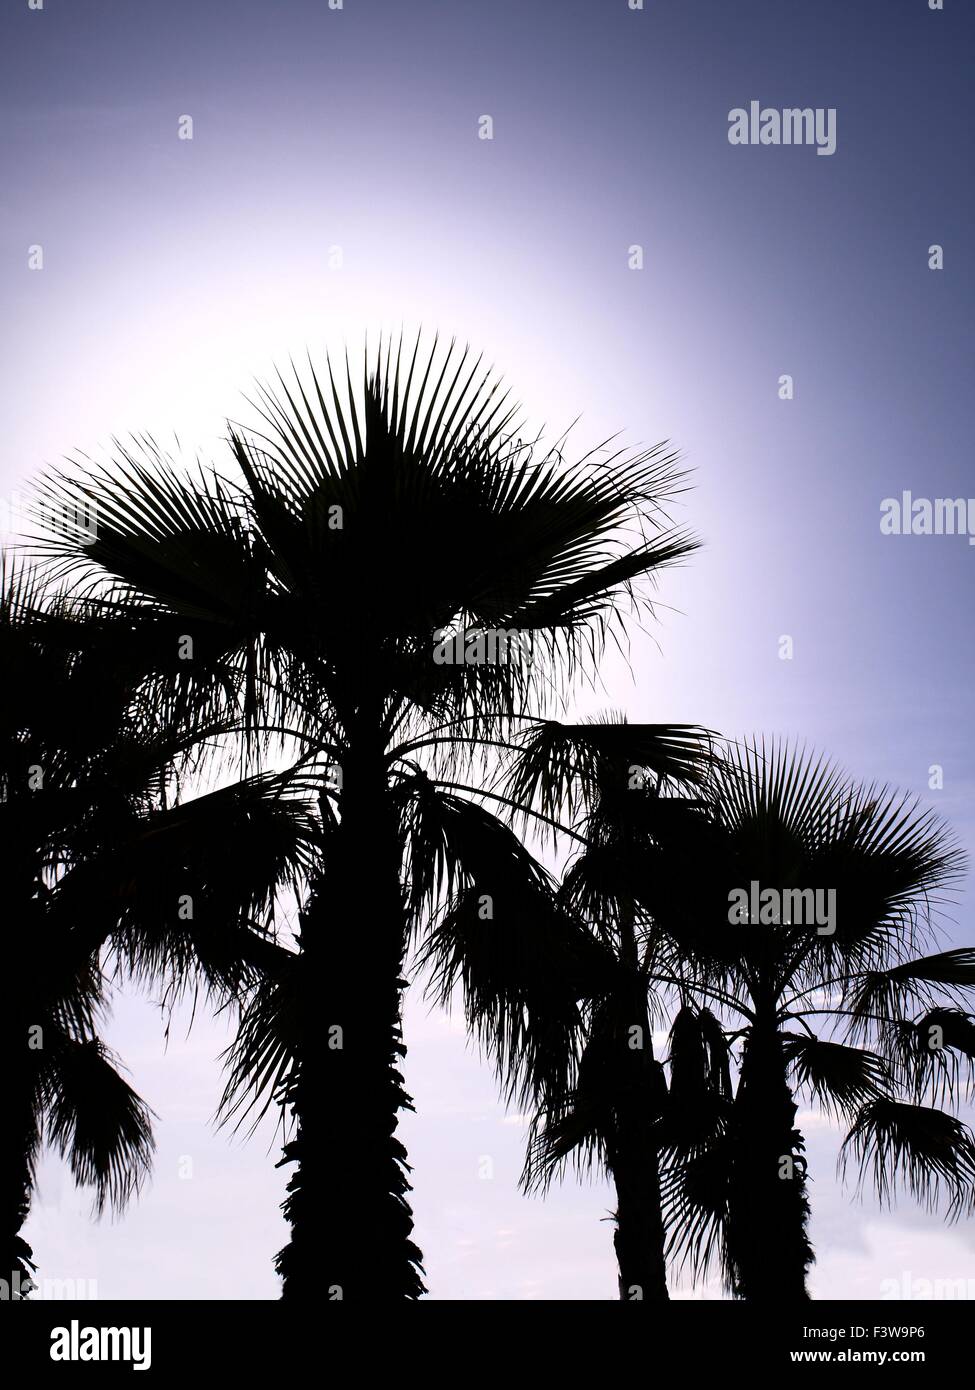 Palmtree Stock Photo